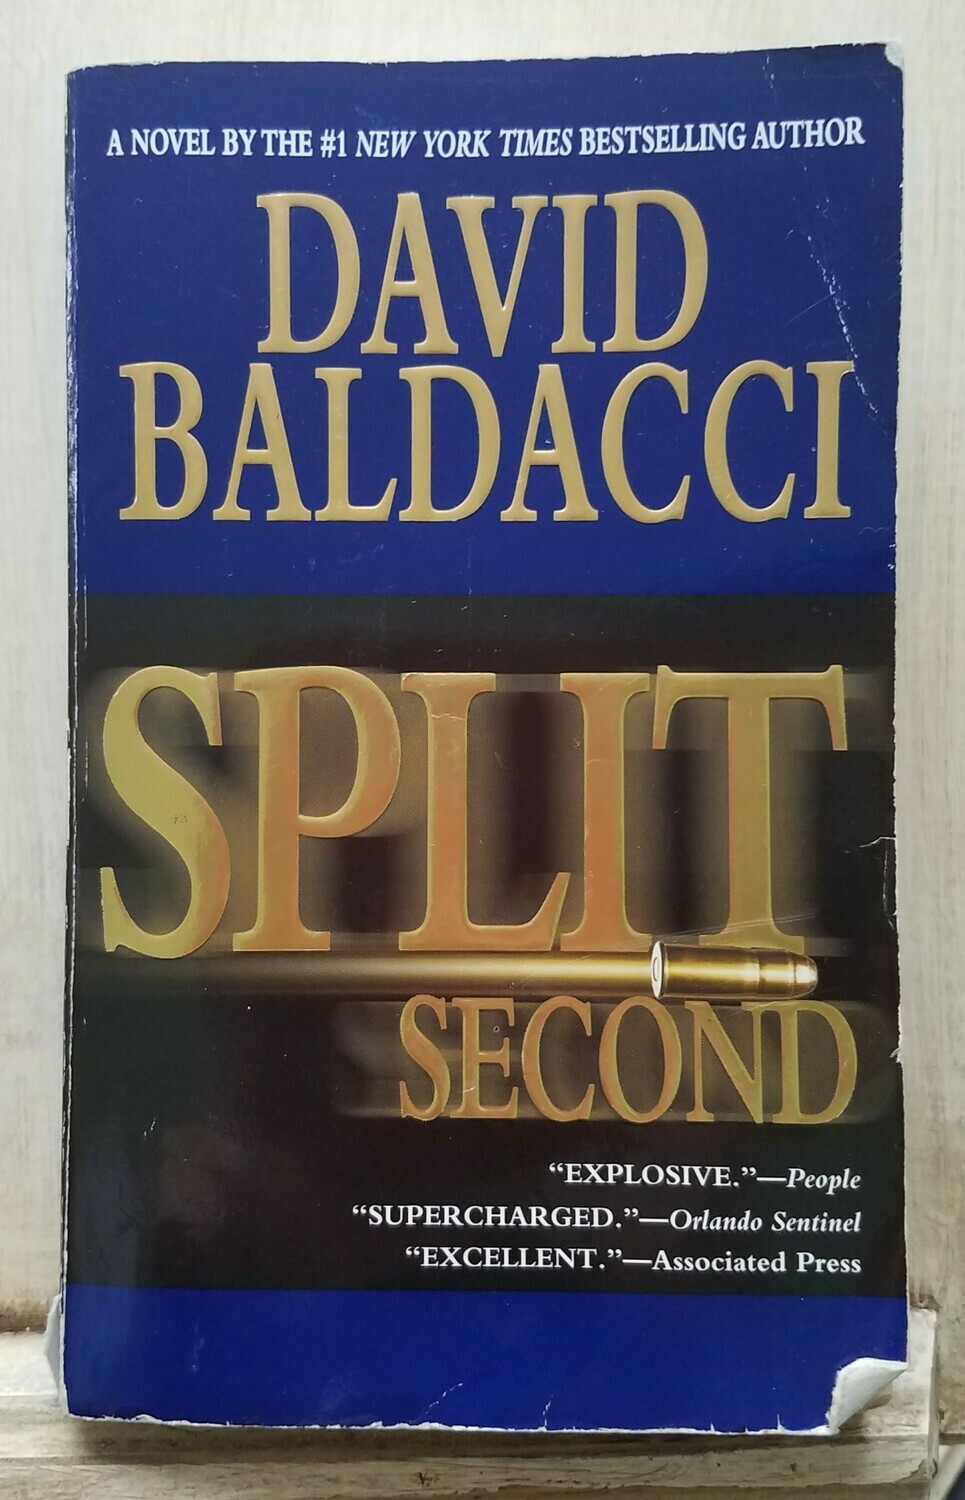 Split Second by David Baldacci